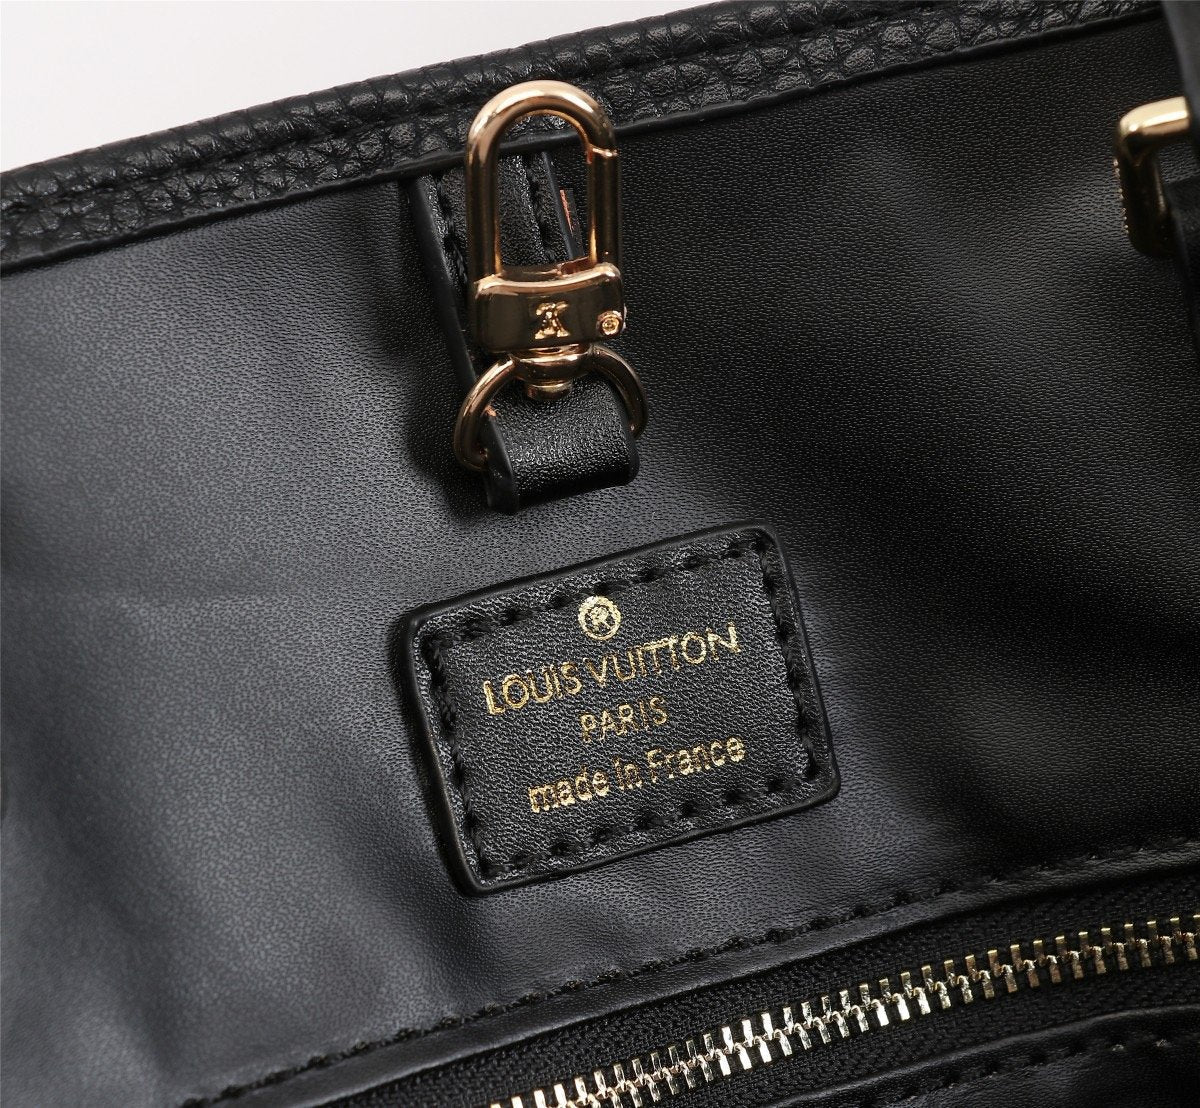 BL - High Quality Bags LUV 296